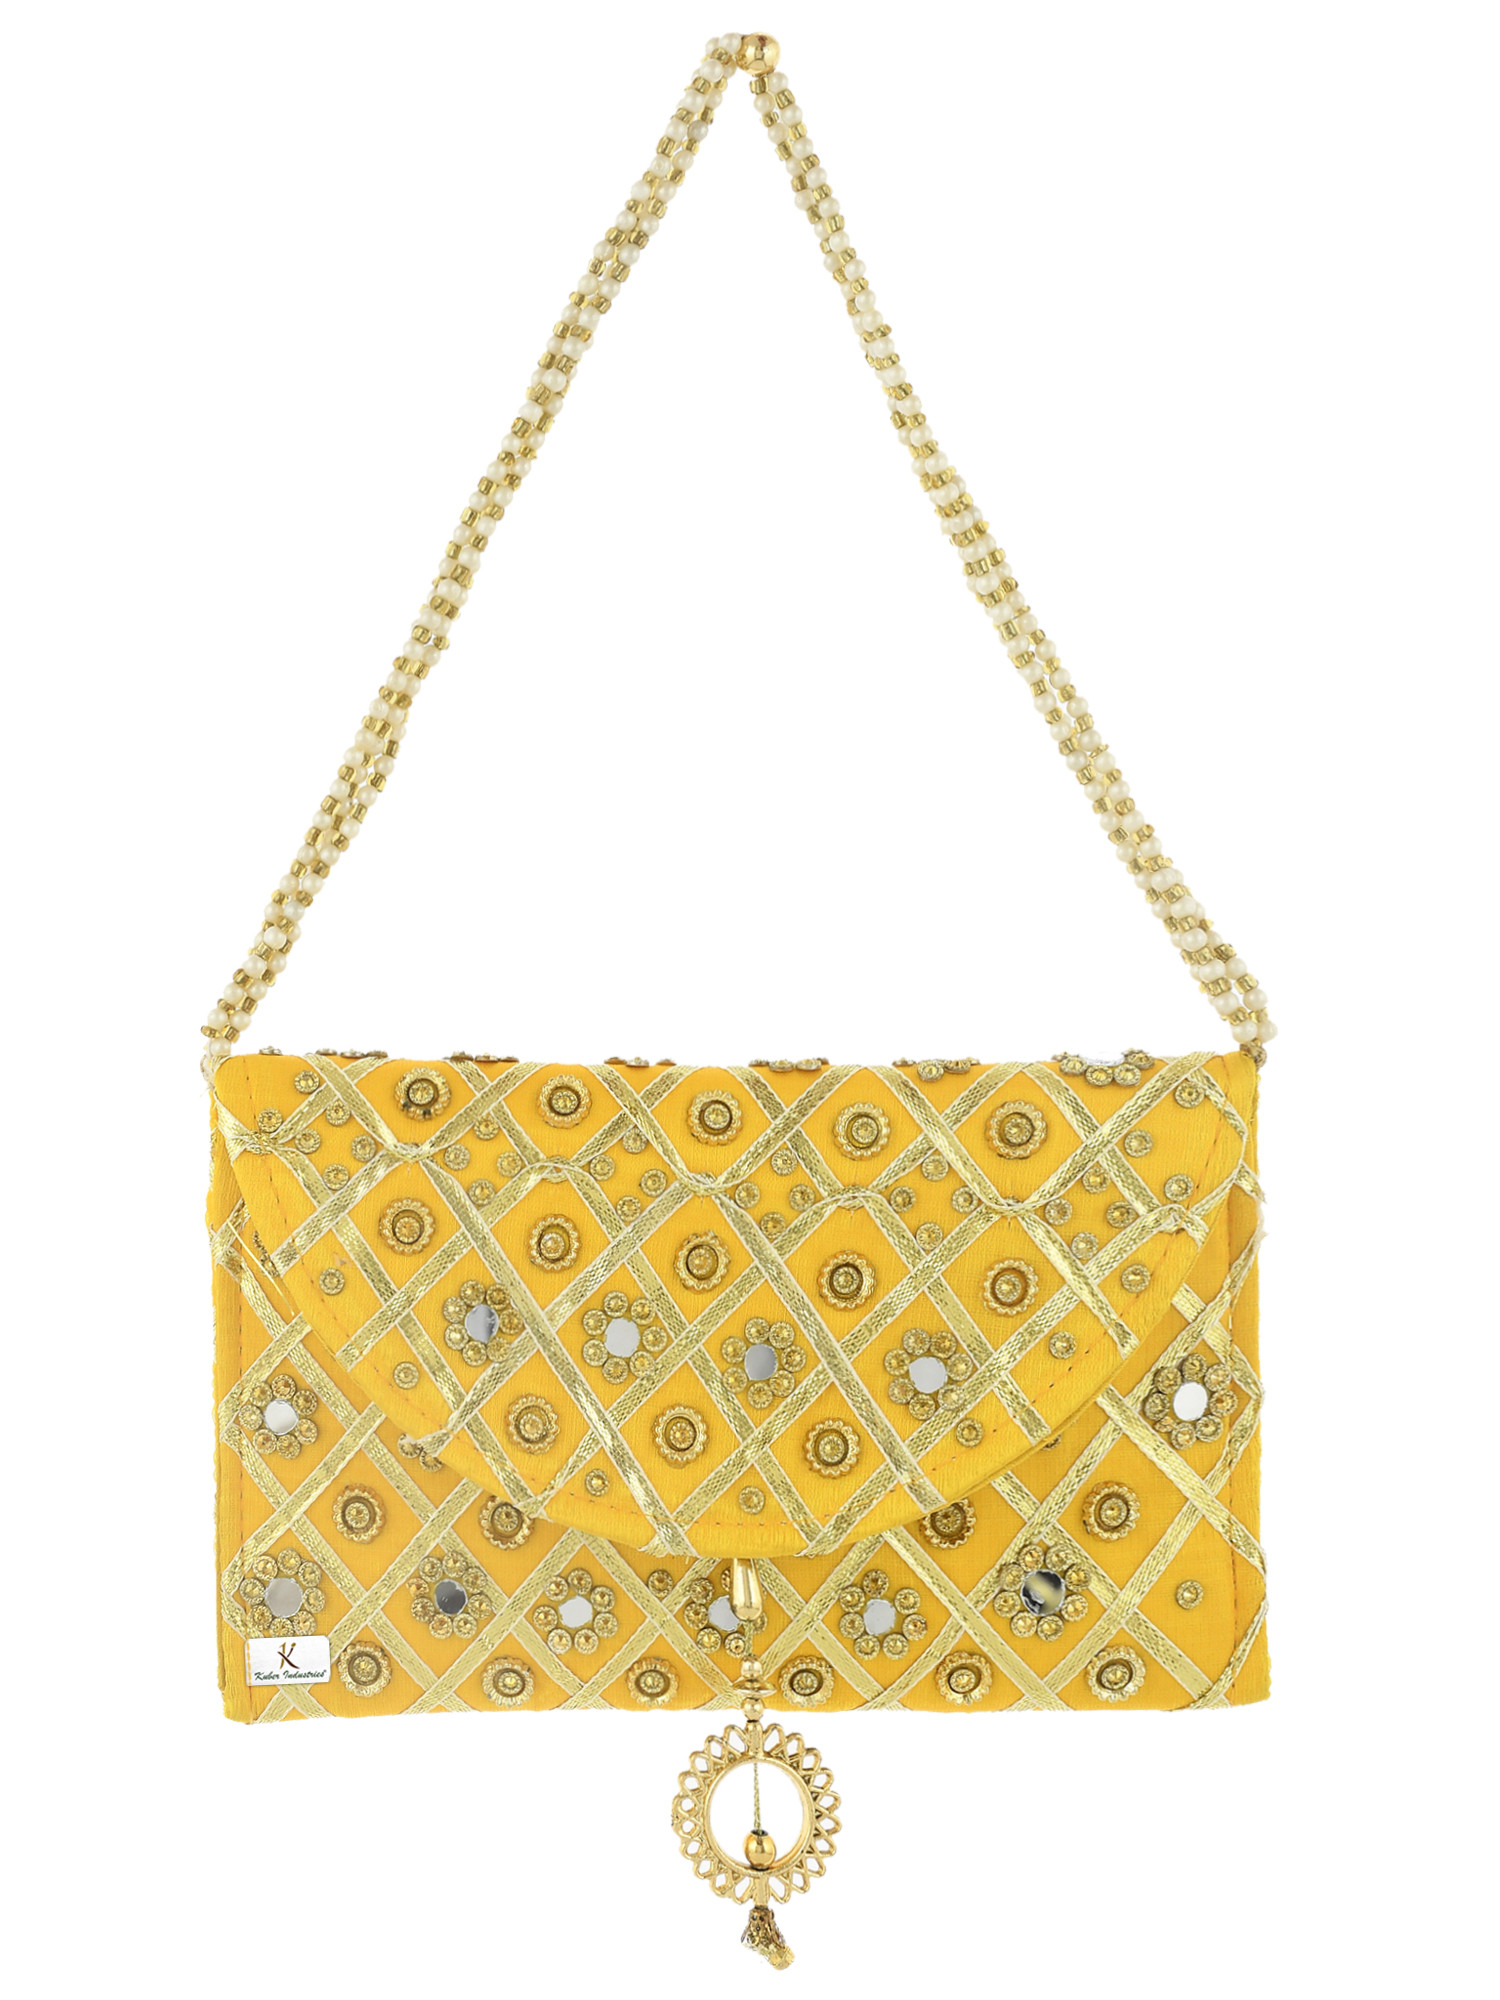 Kuber Industries 2 Pieces Silk Traditional Mirror Work Envelope Clutch/Hand Purse Bag For Women/Girls (Pink & Gold)-KUBMRT11463